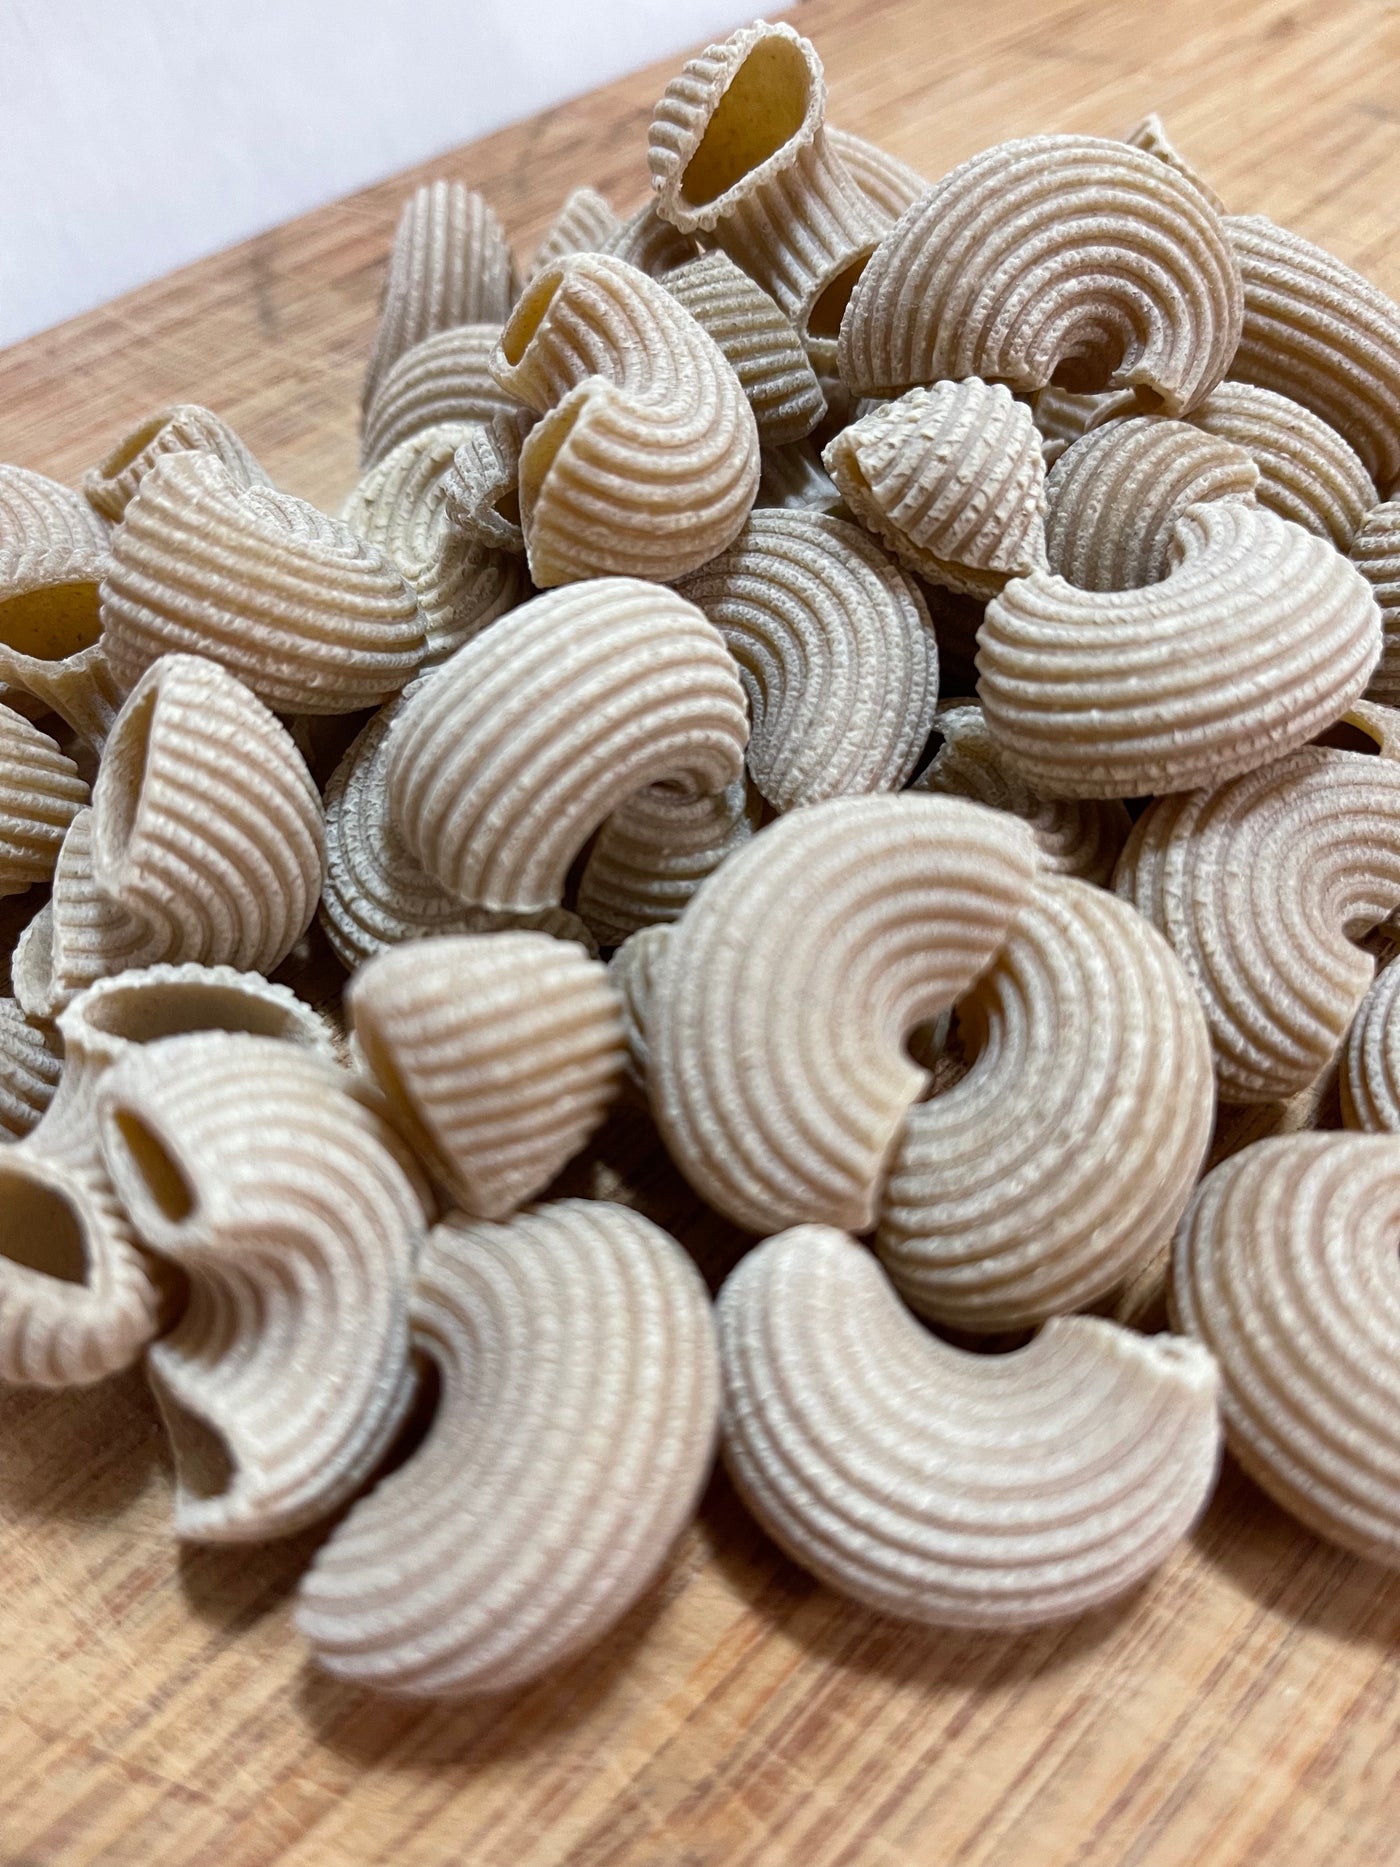 Cavaliere Lumache dried pasta